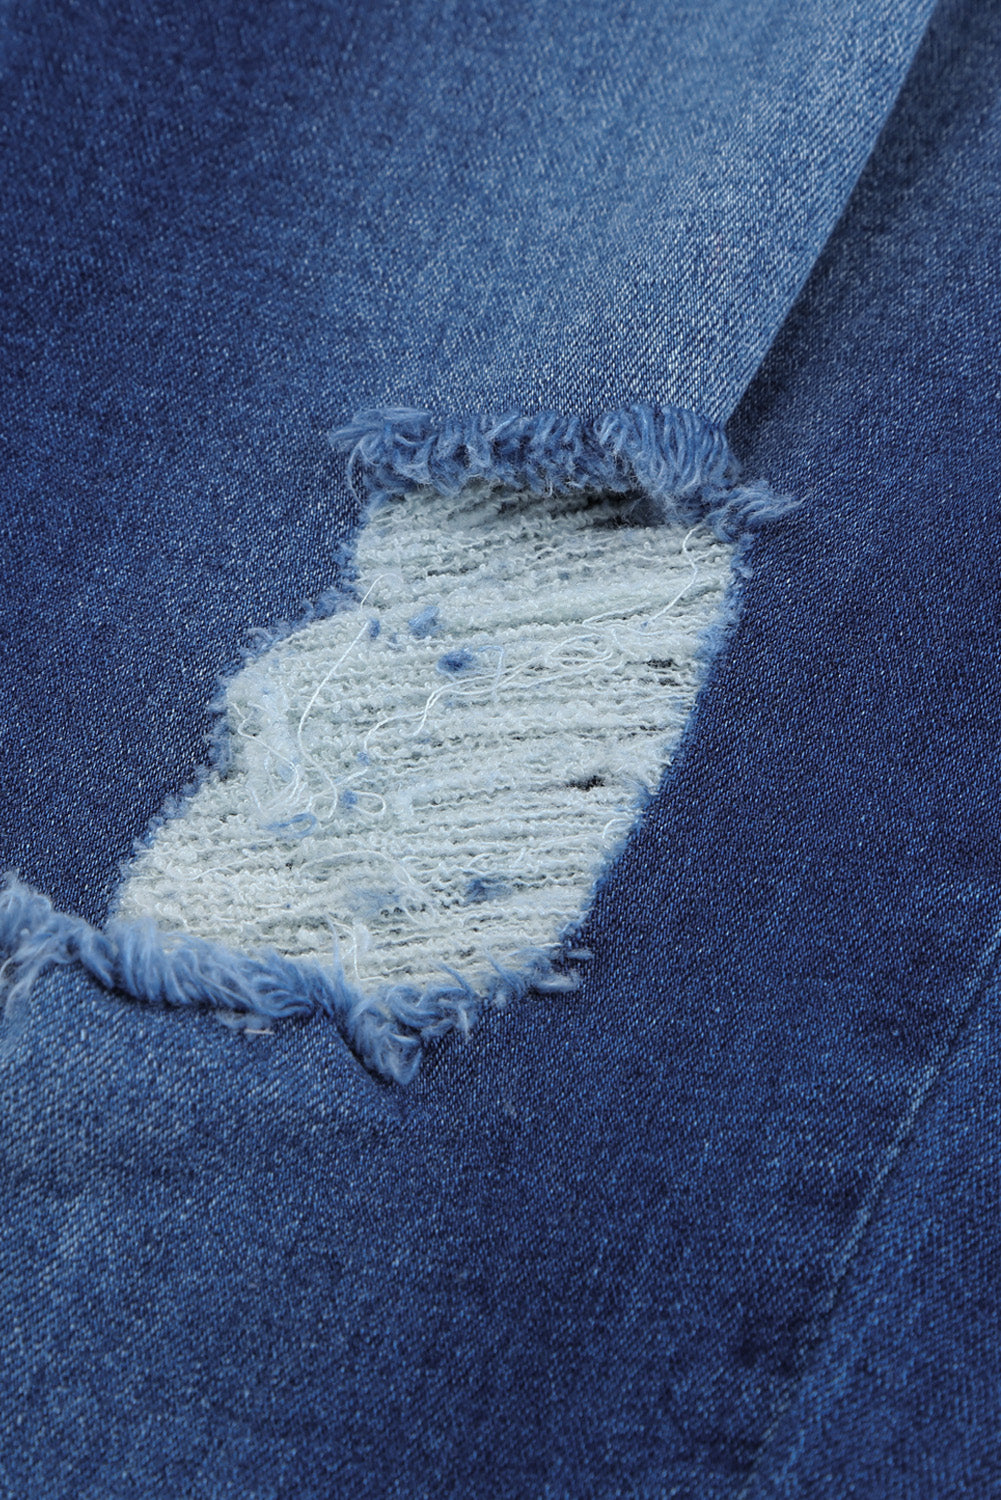 Light Blue Drawstring Elastic Waist Jeans With Hole